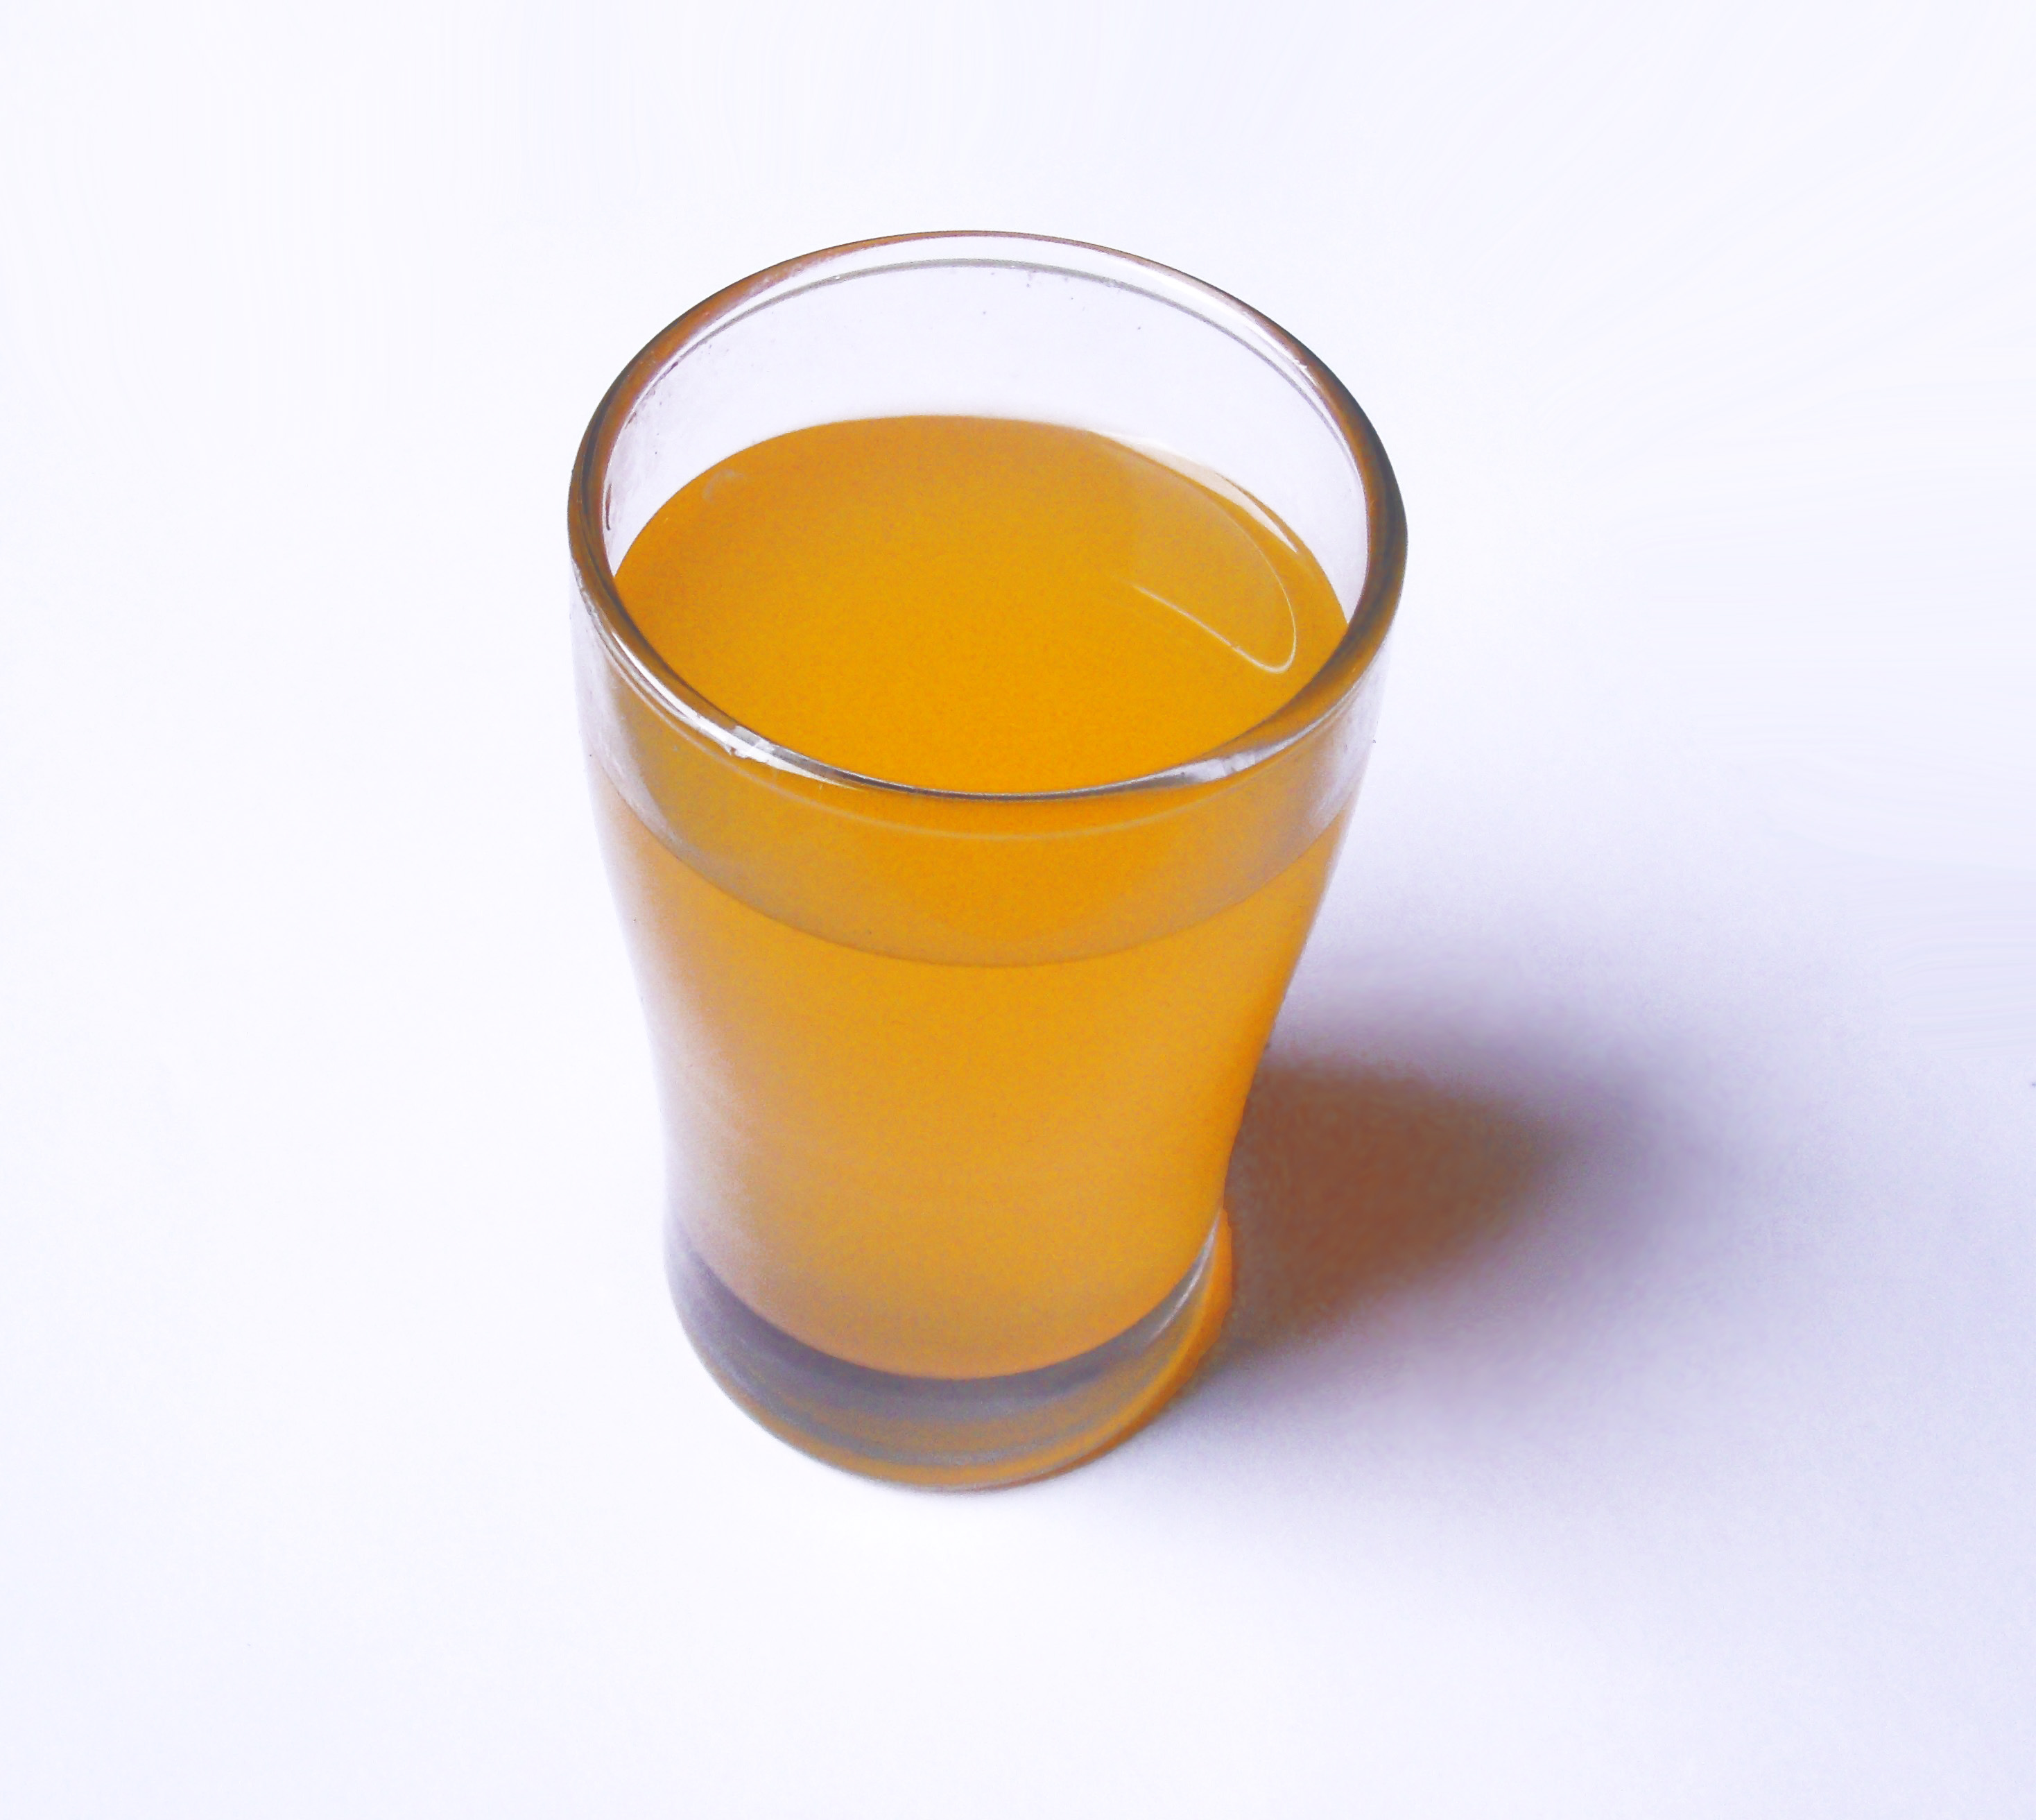 Orange juice in a glass photo